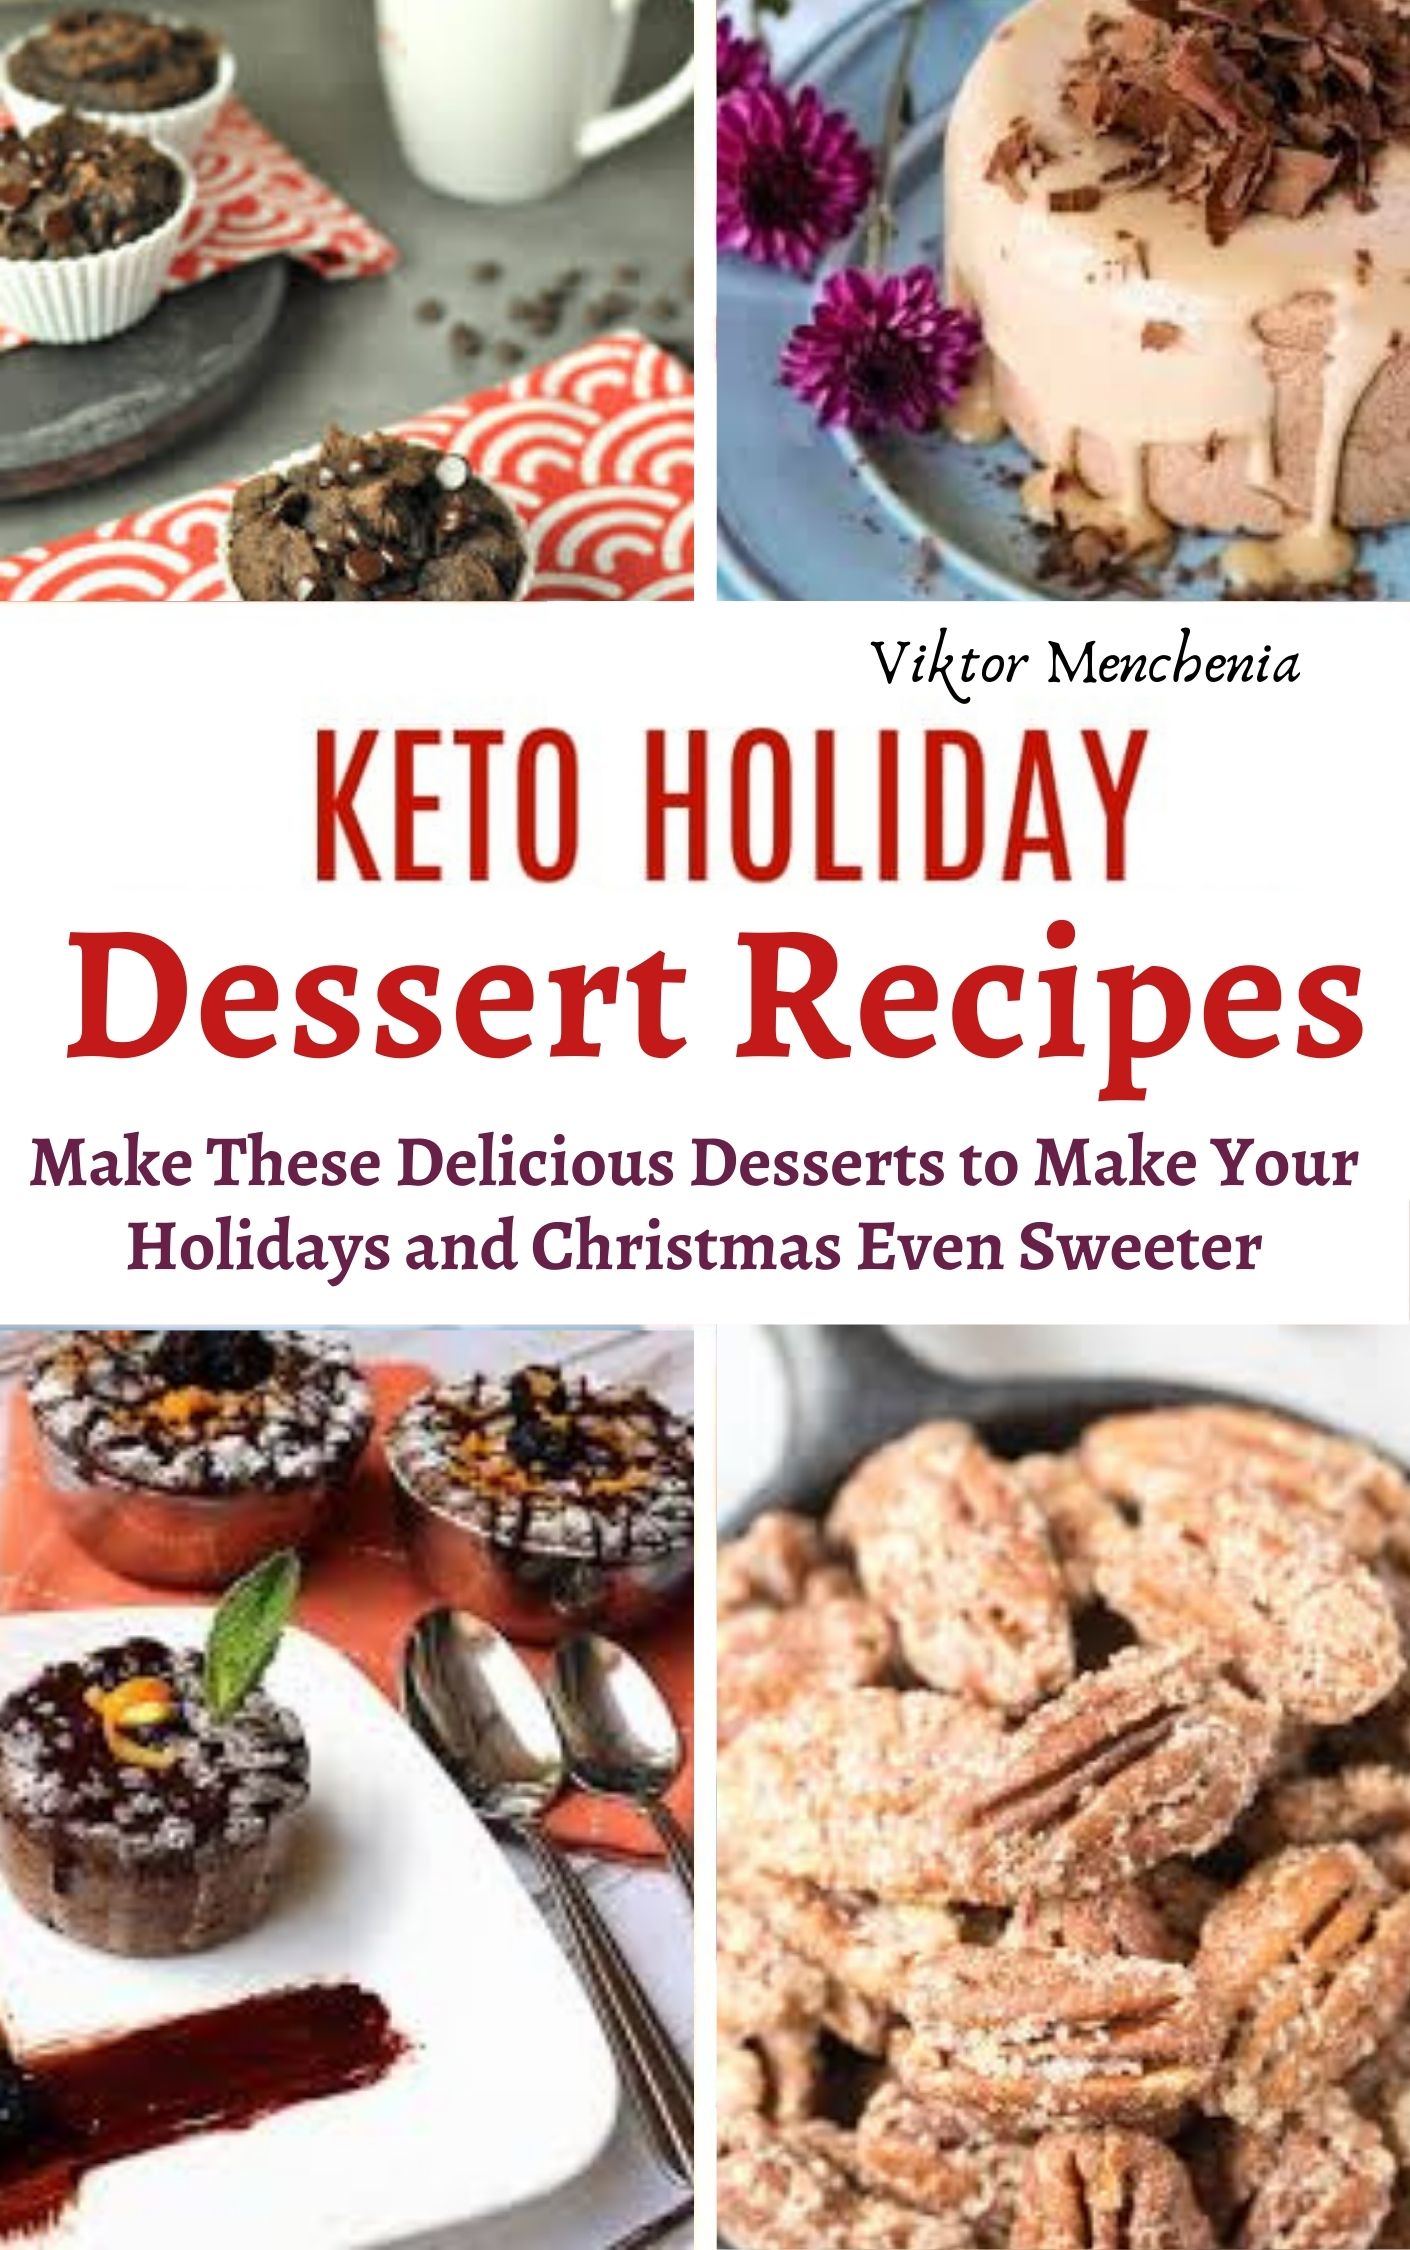 FREE: Keto Holiday Dessert Recipes by Viktor Menchenia